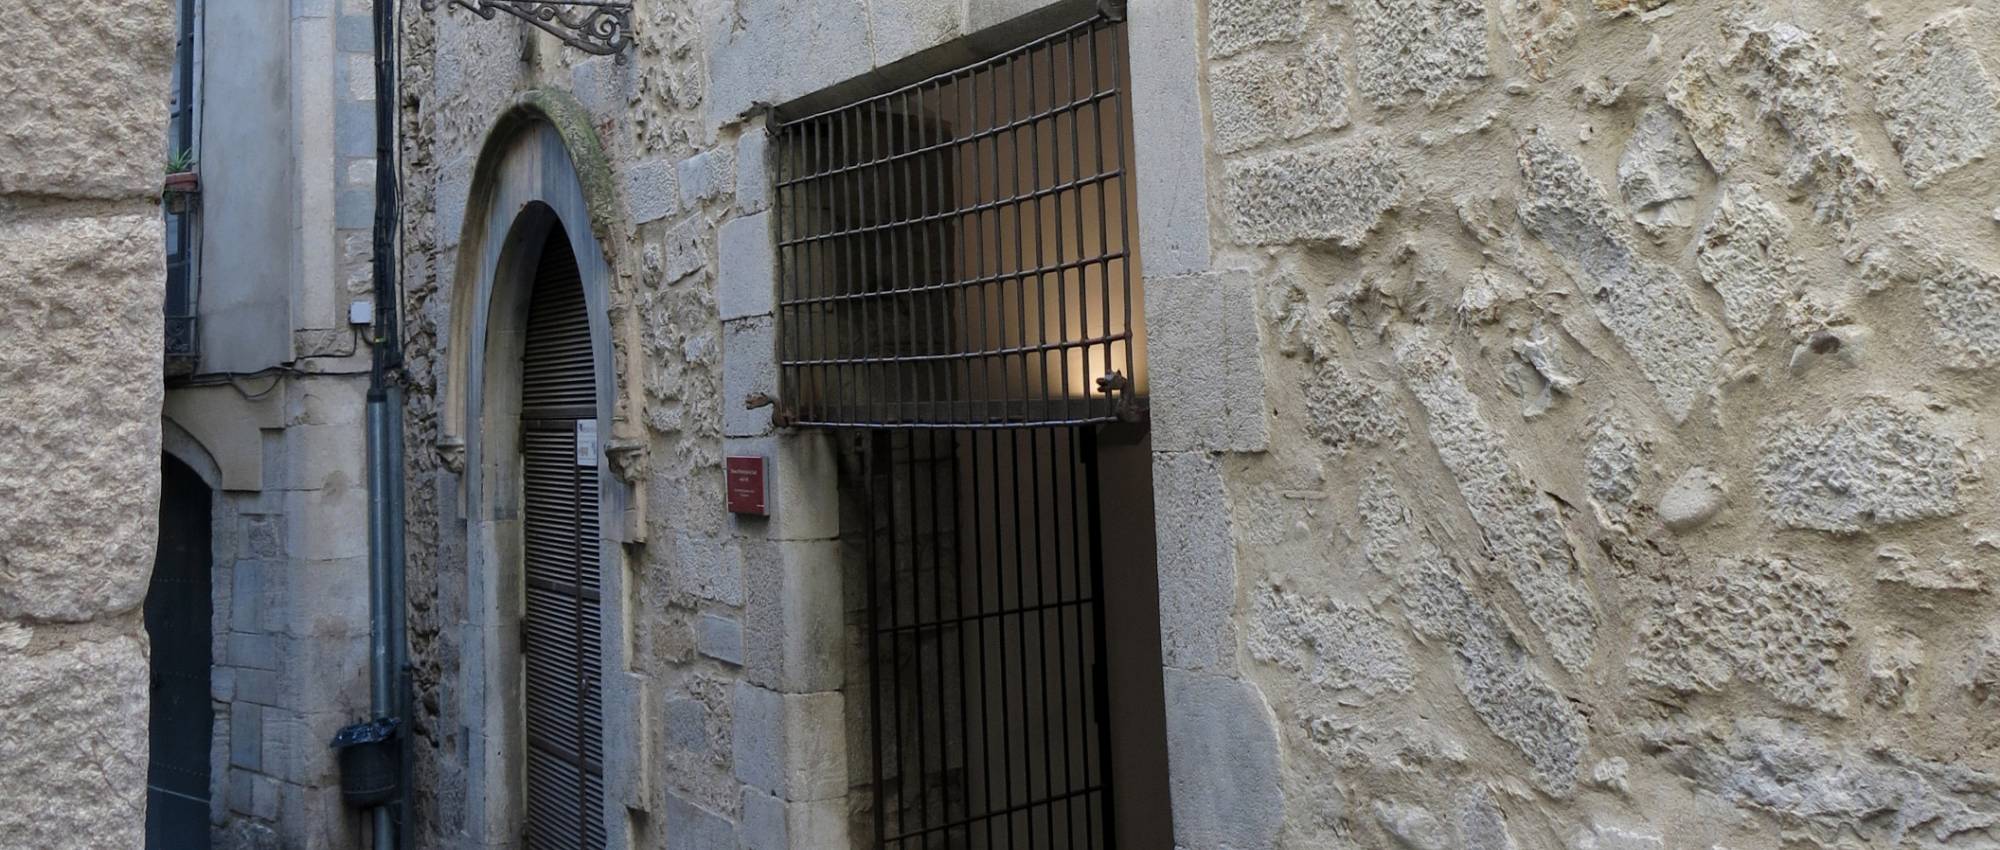 Entrada del Museu d'Història de Girona. CC BY-SA 4.0 - Enfo / Wikimedia Commons